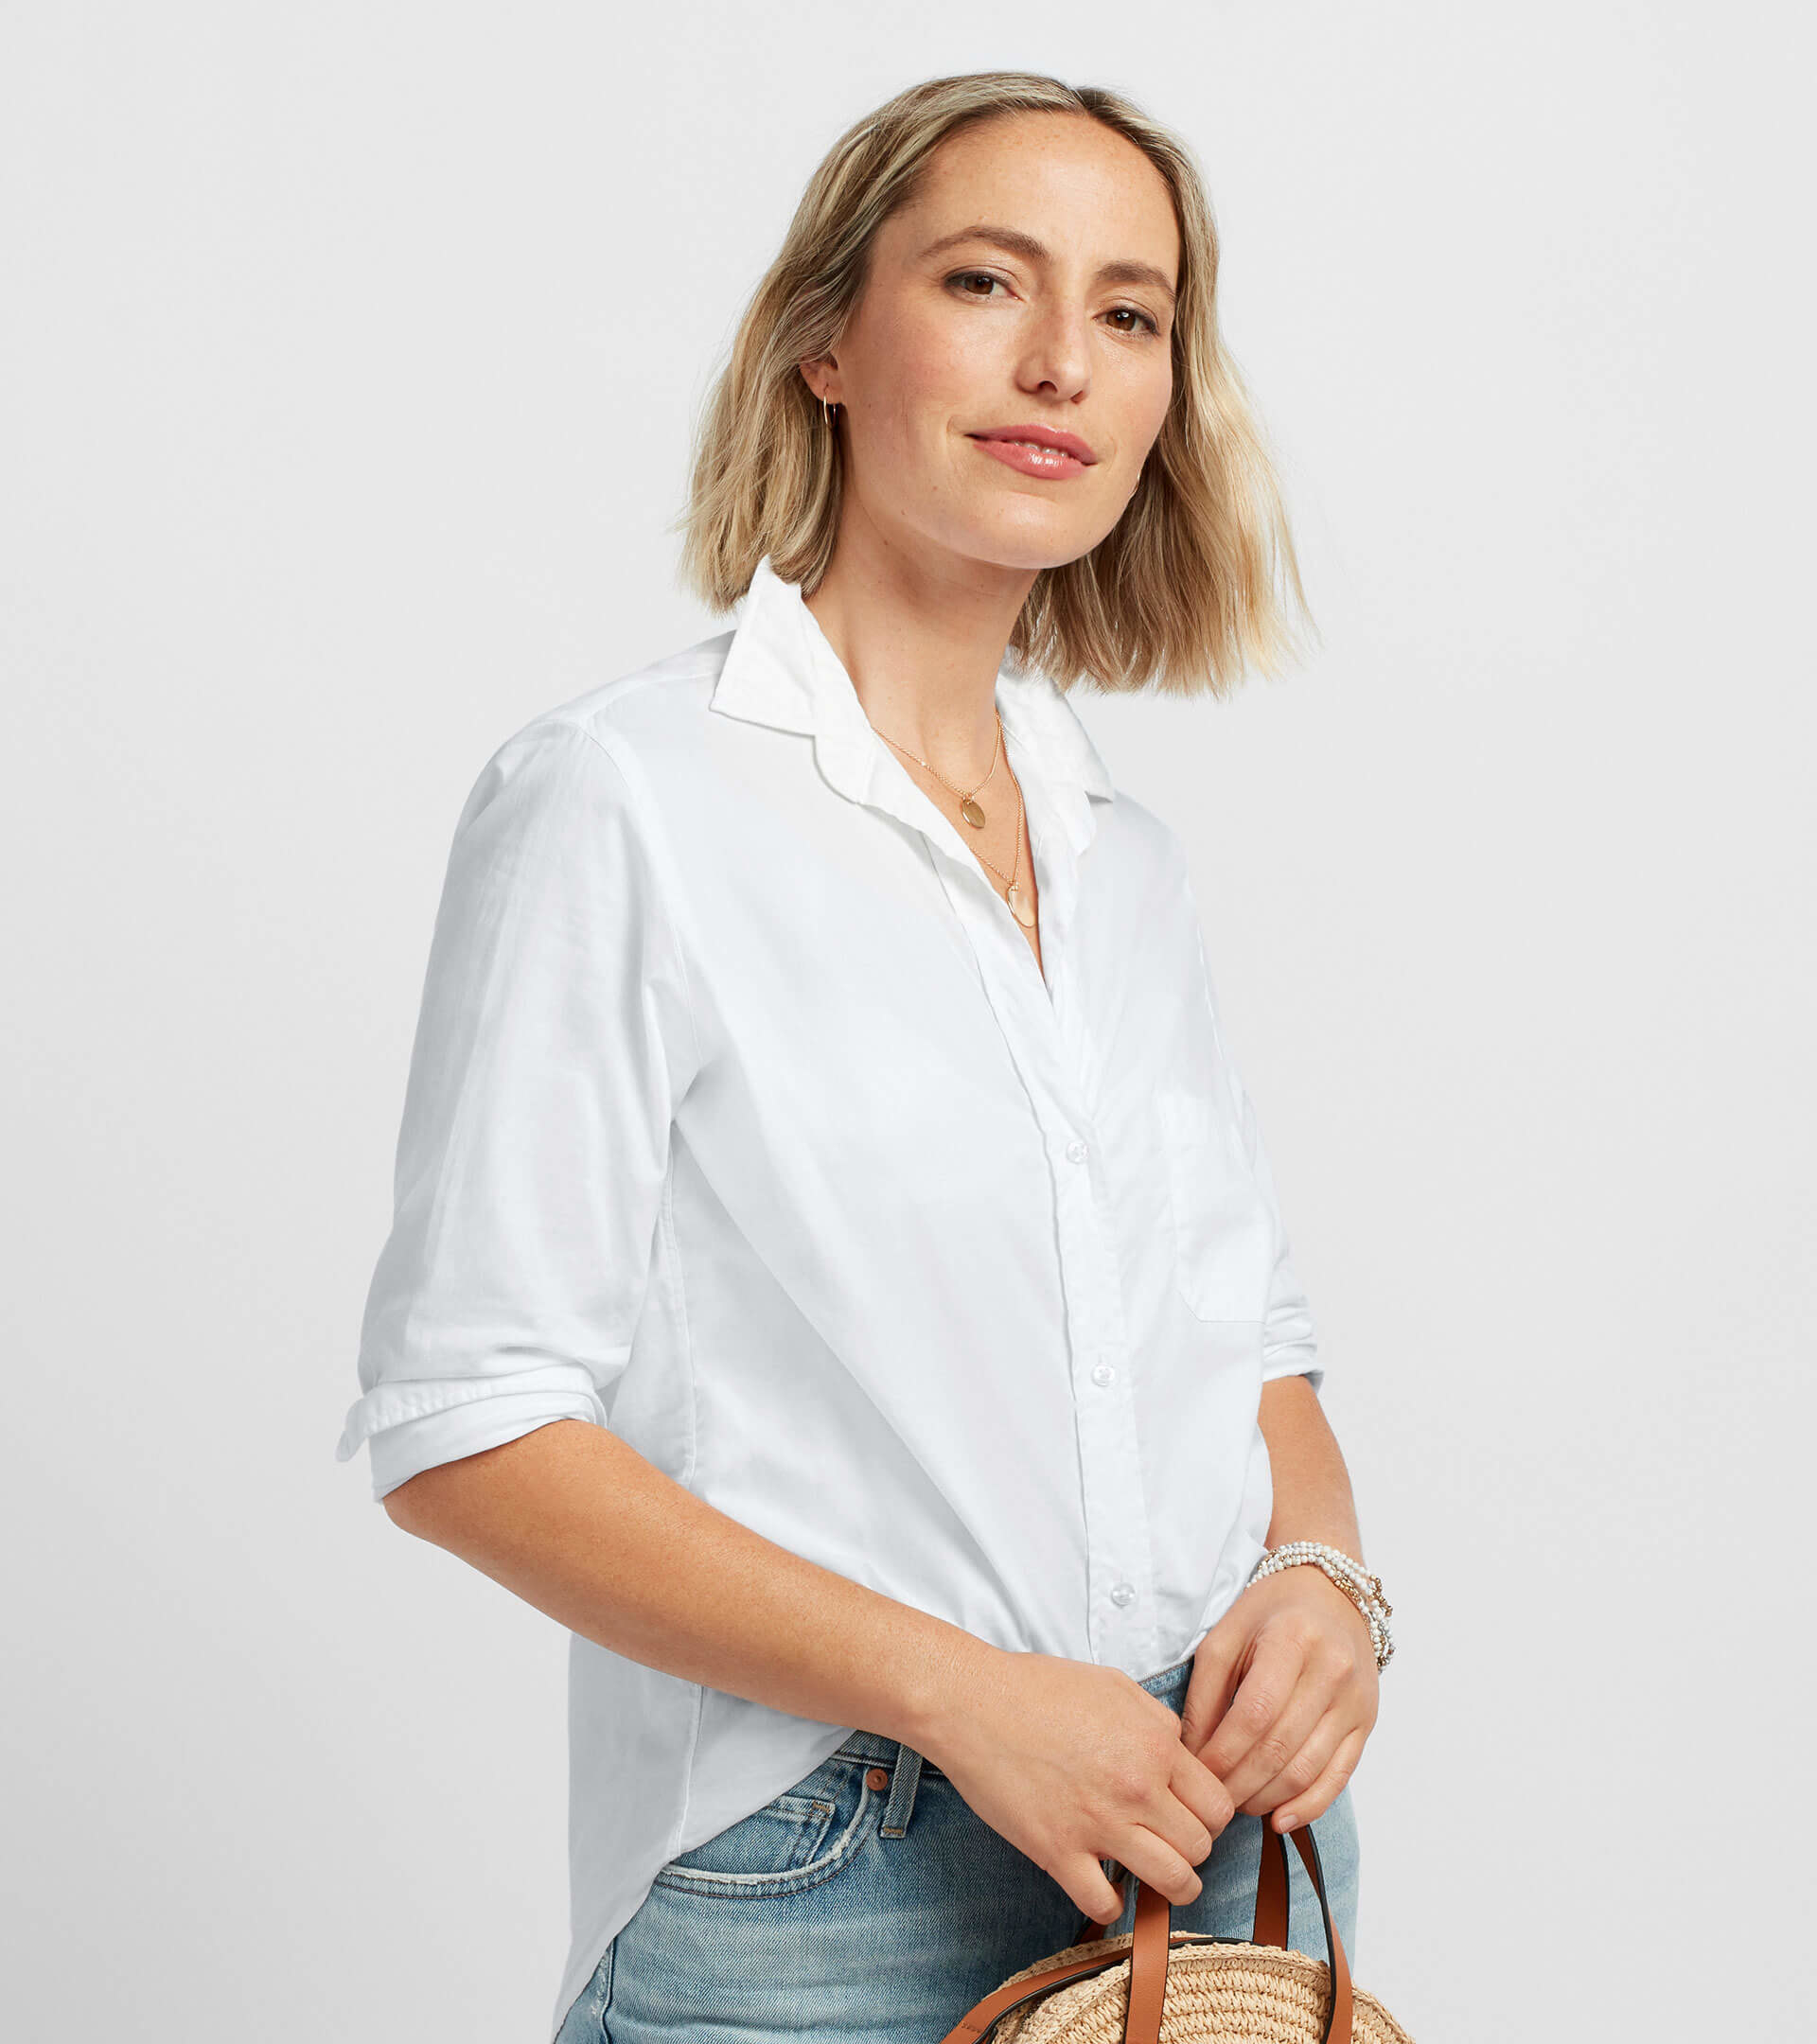 Model wearing the white button-down shirt